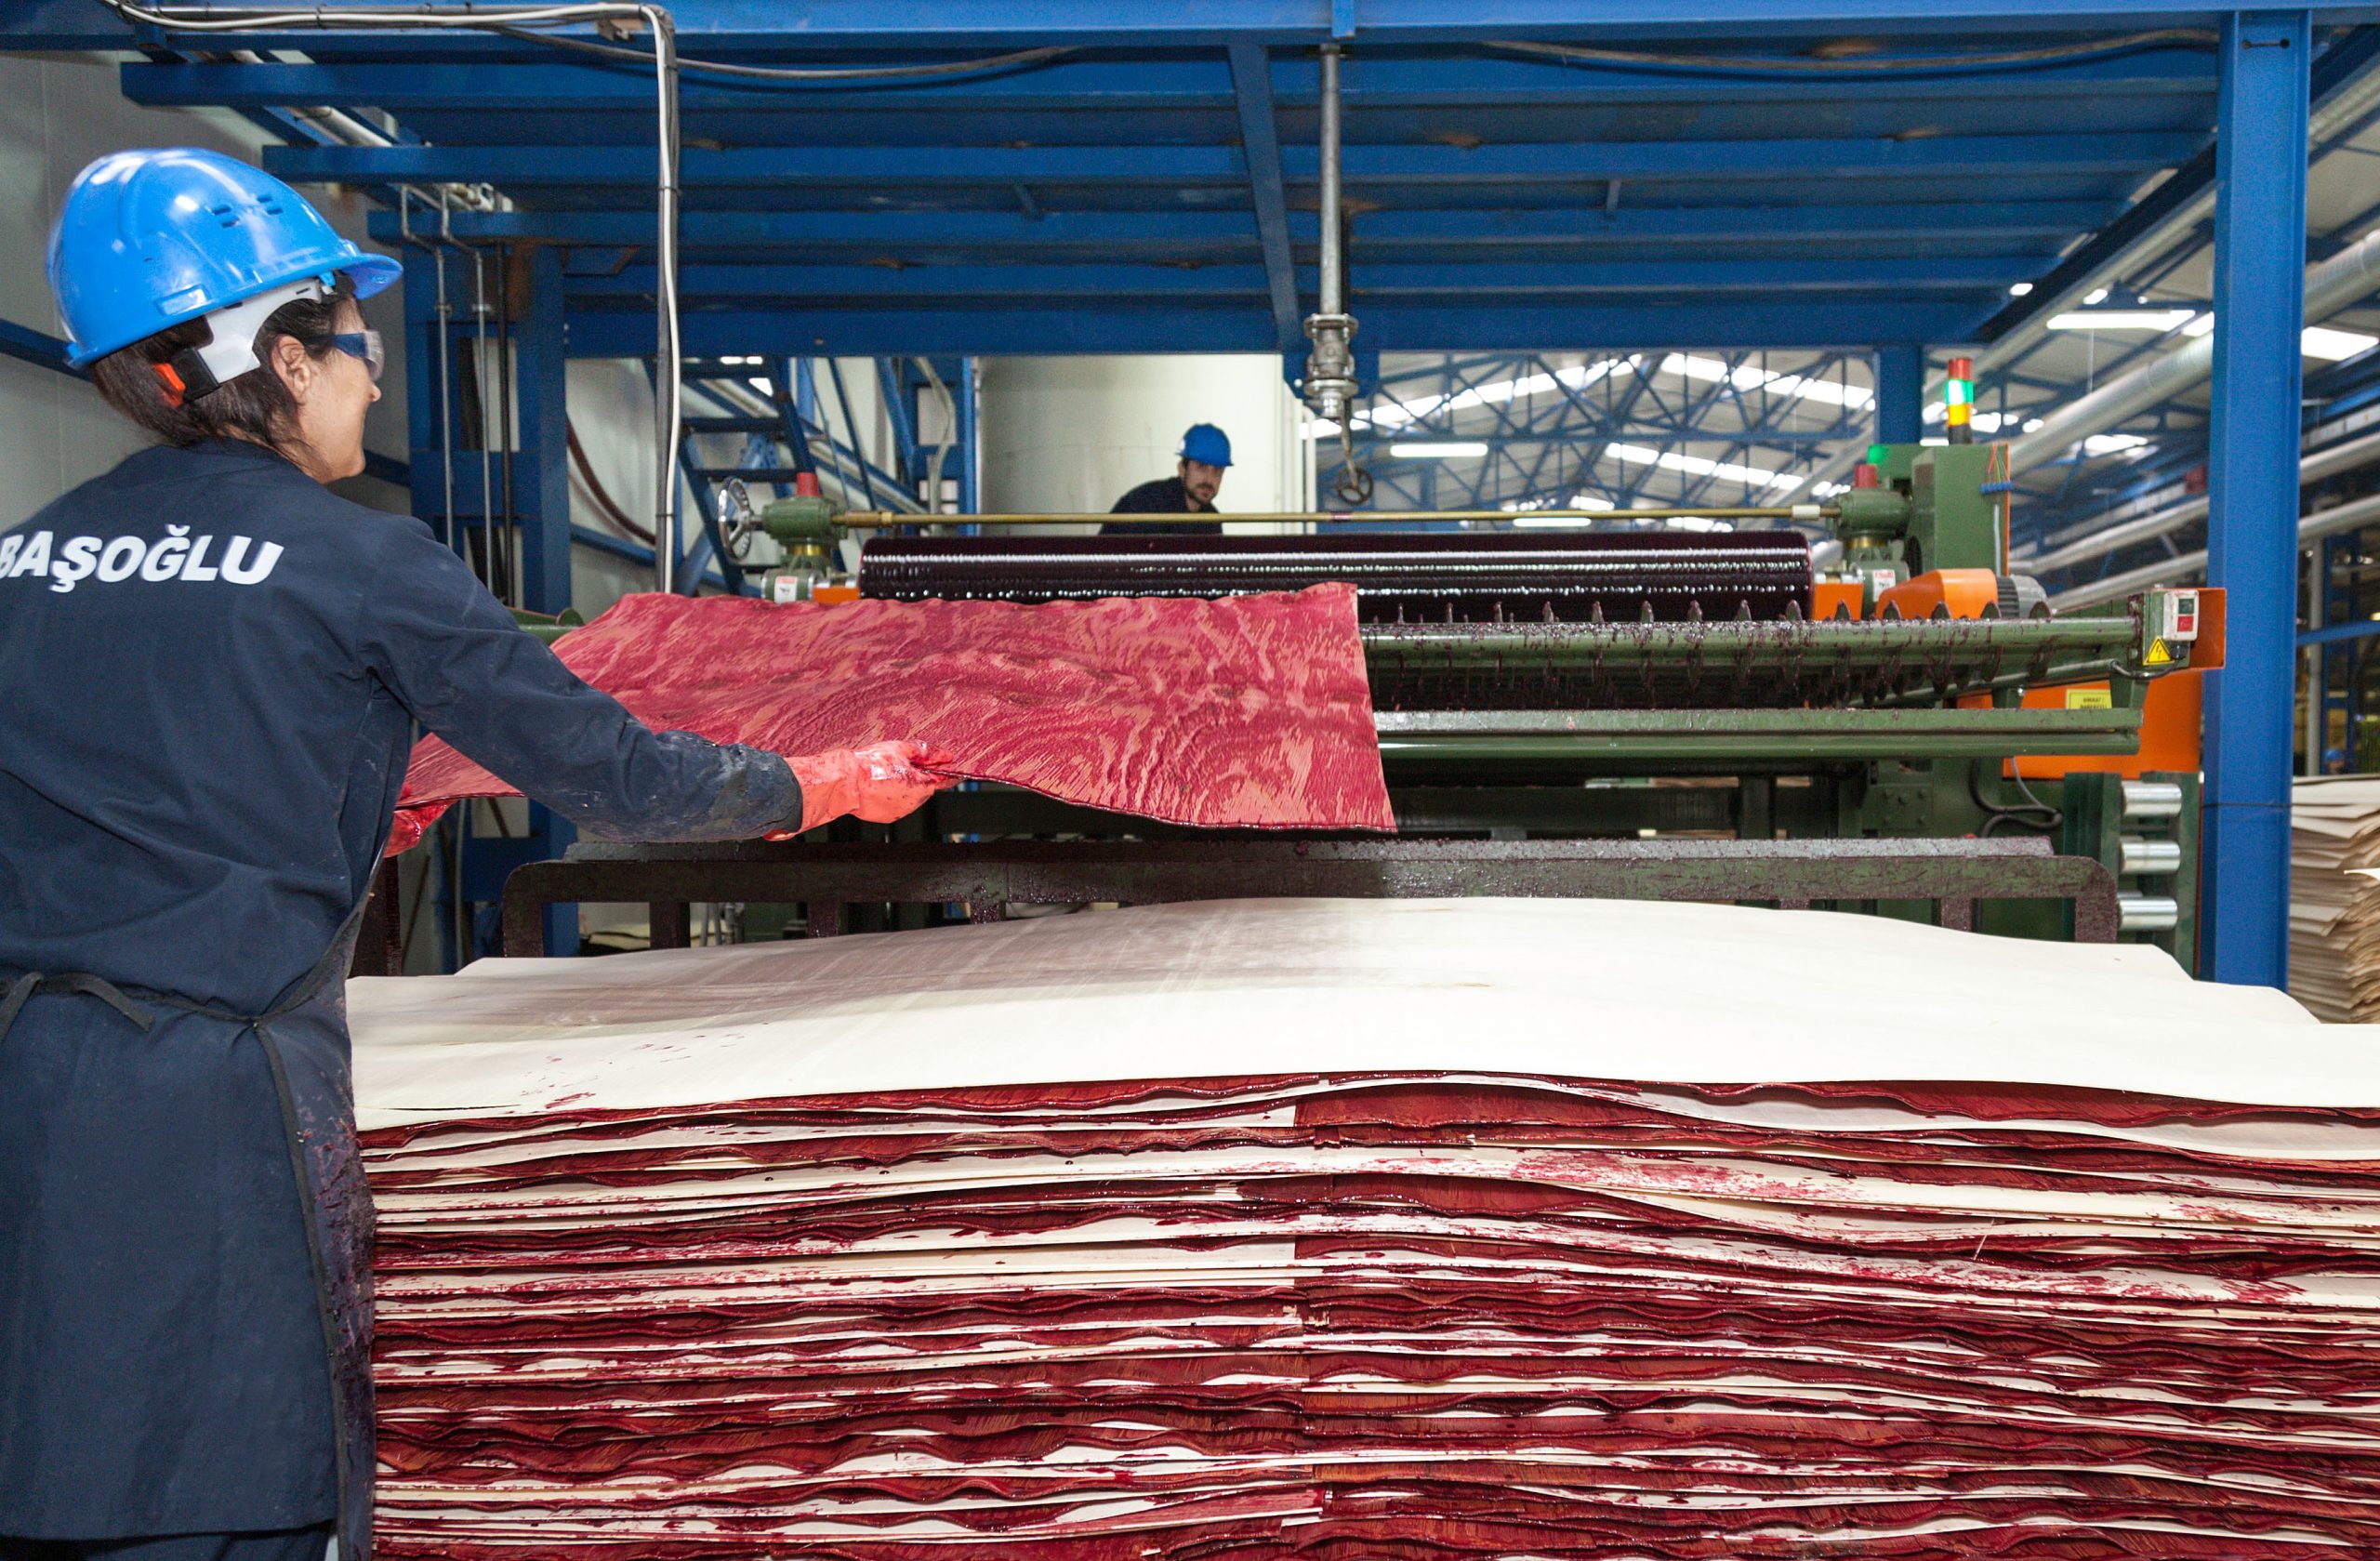 Başoğlu Orman- Productive Forest Products Manufacturer